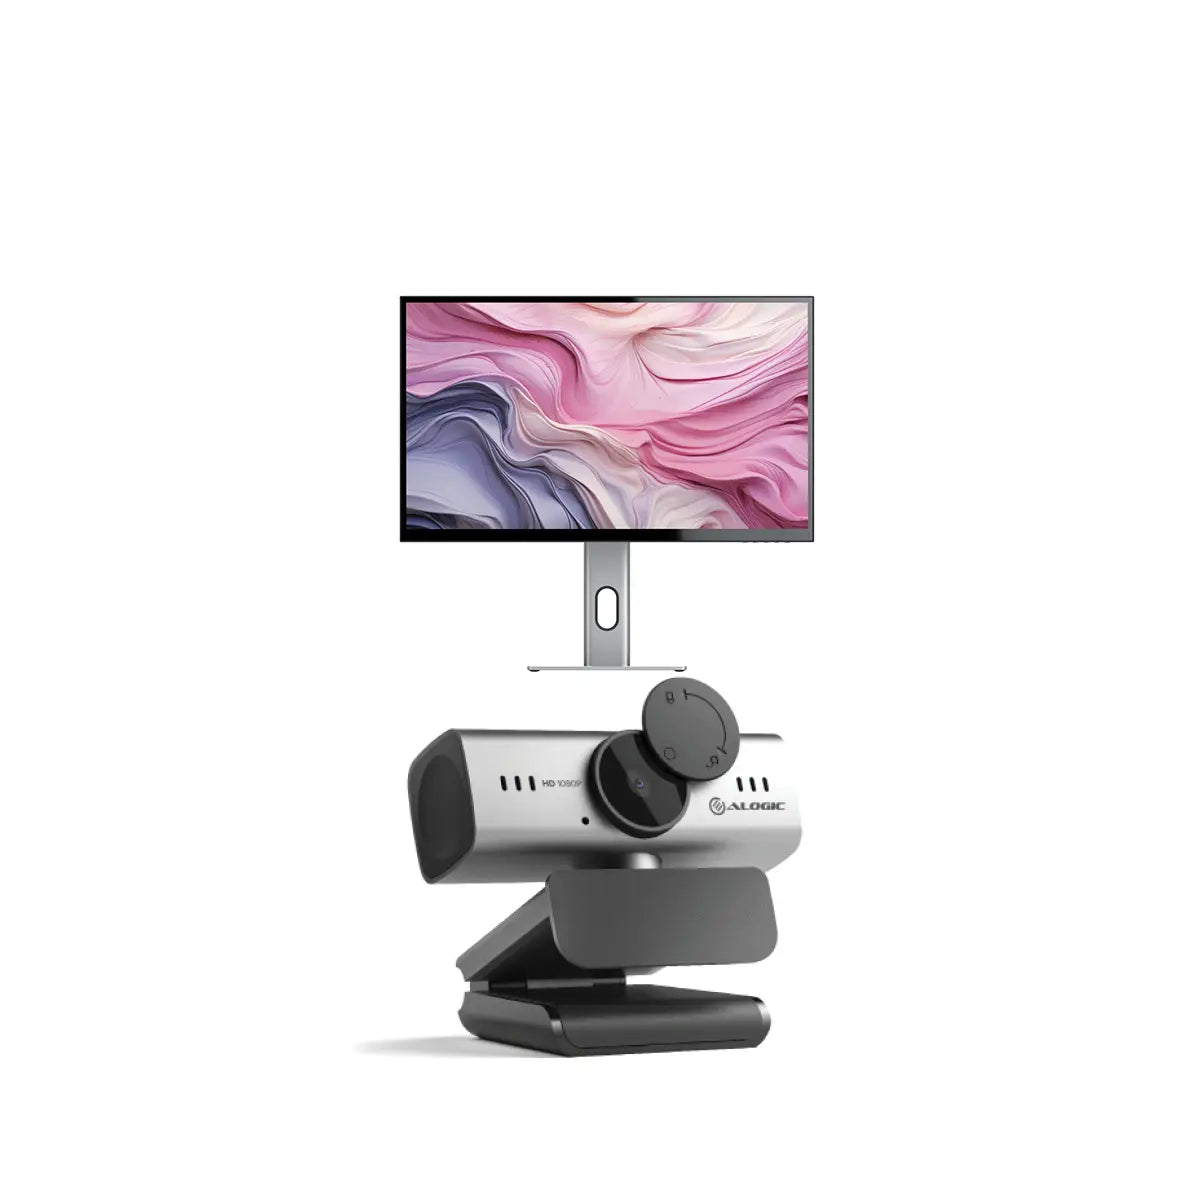 clarity-27-uhd-4k-monitor-iris-webcam-a091